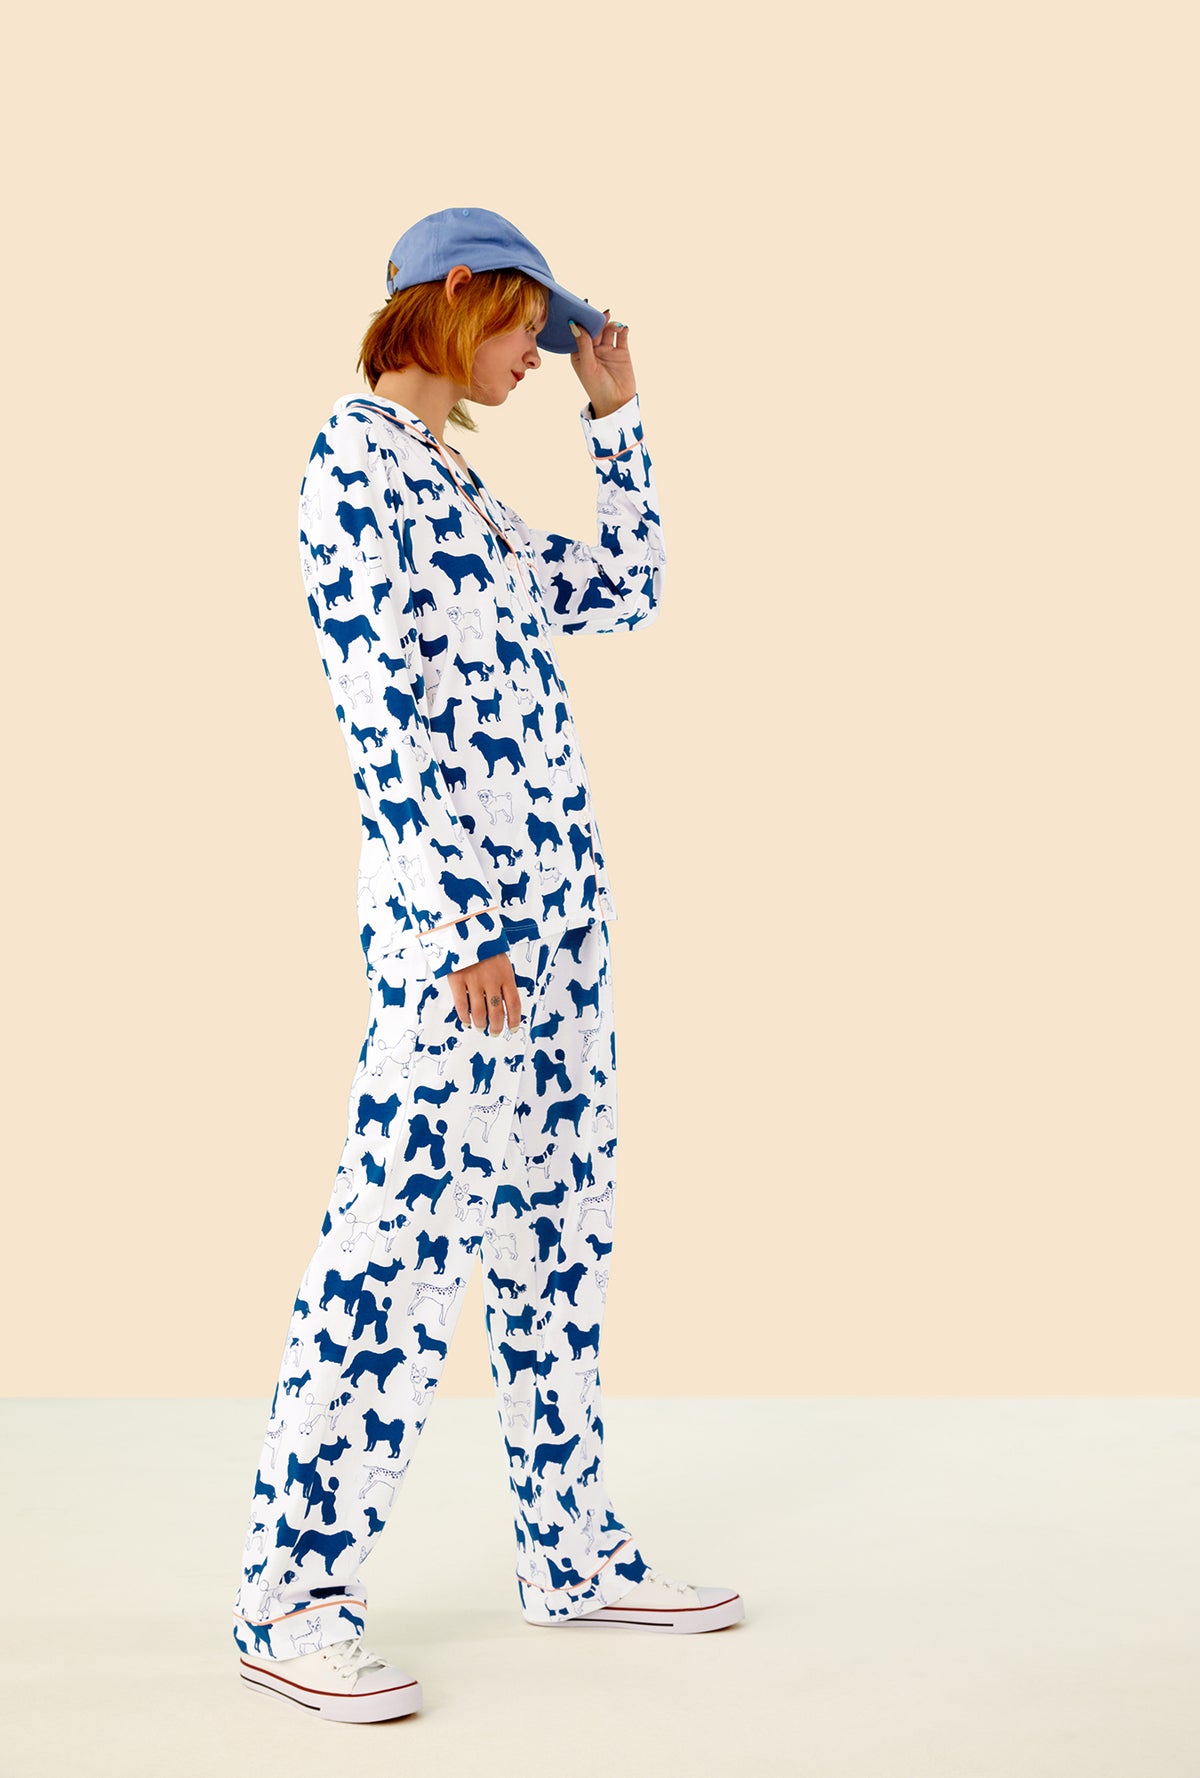 A lady wearing a white long sleeve pajama set with dog pattern.